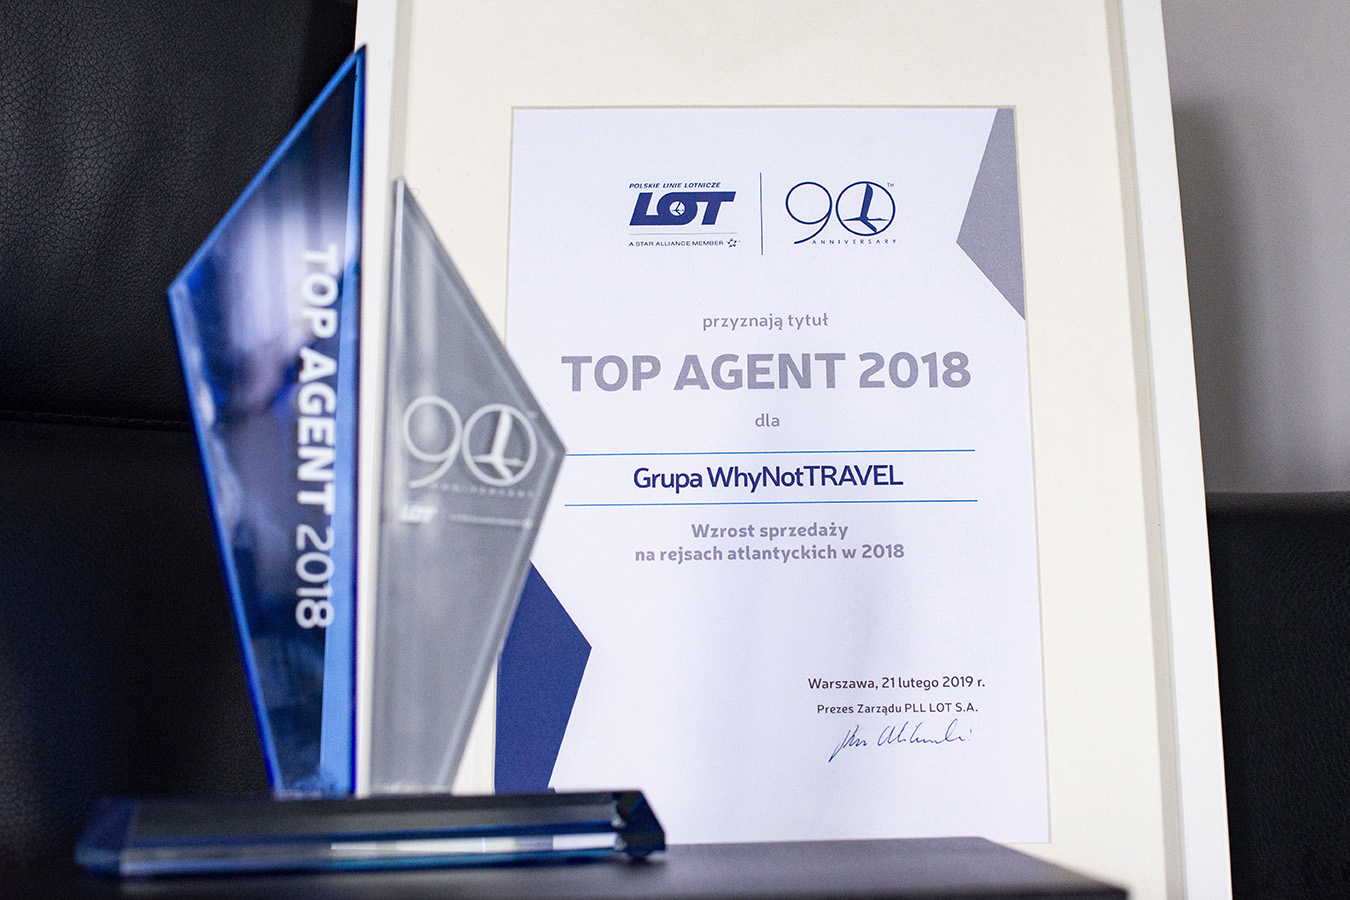 Grupa Why Not TRAVEL ze statuetką Top Agent 2018 od PLL LOT